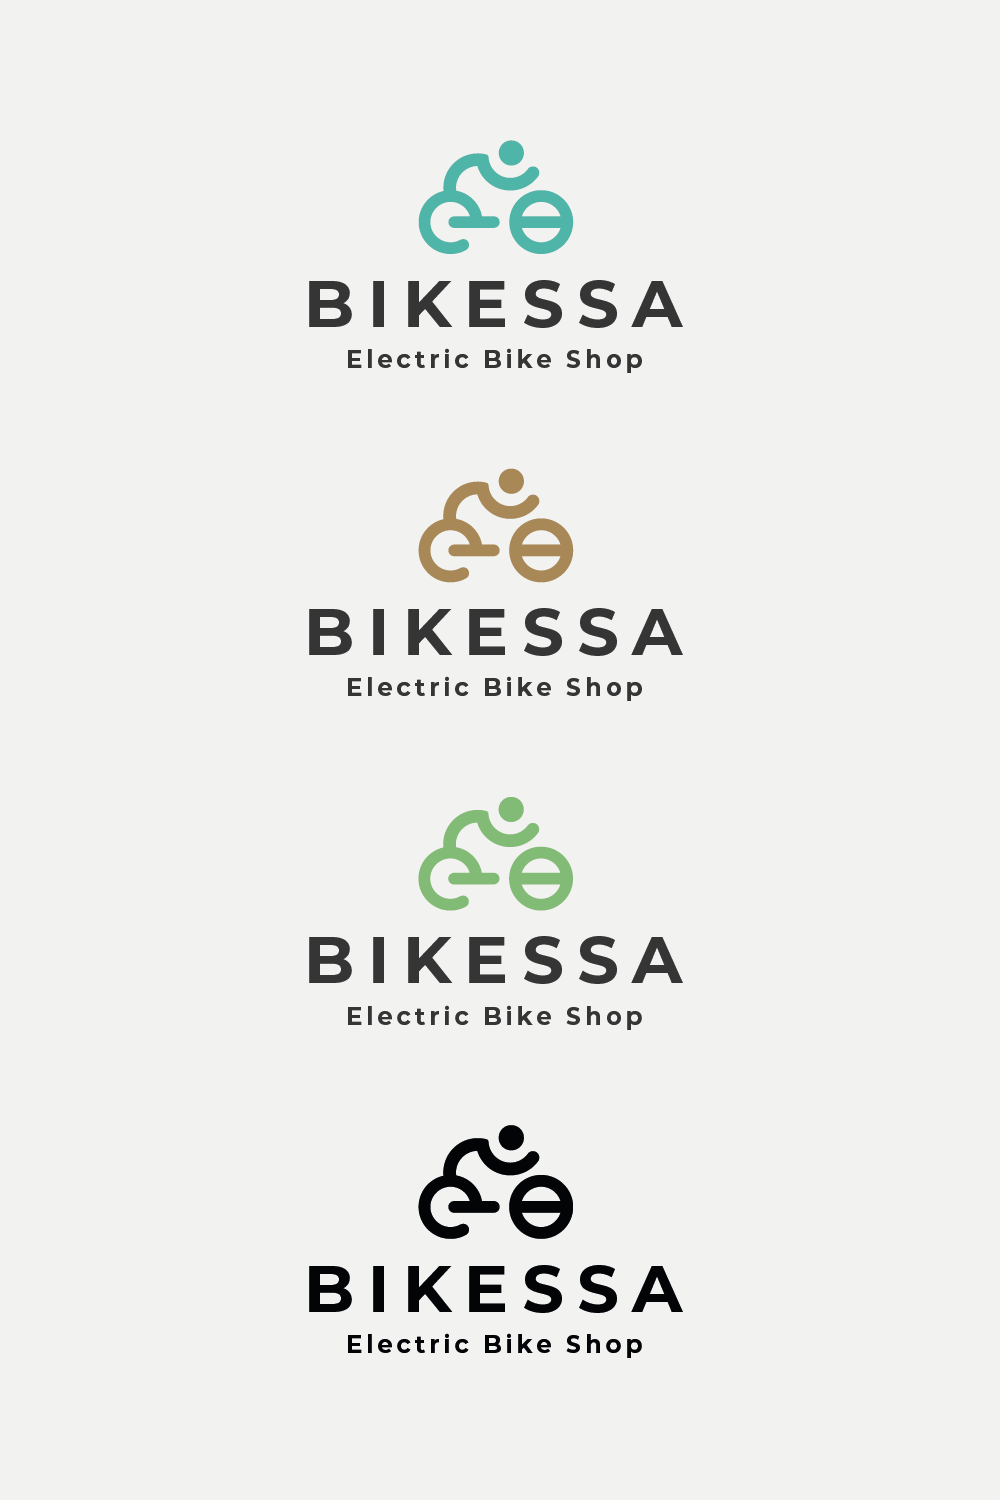 Electric Bike Shopping Logo pinterest preview image.